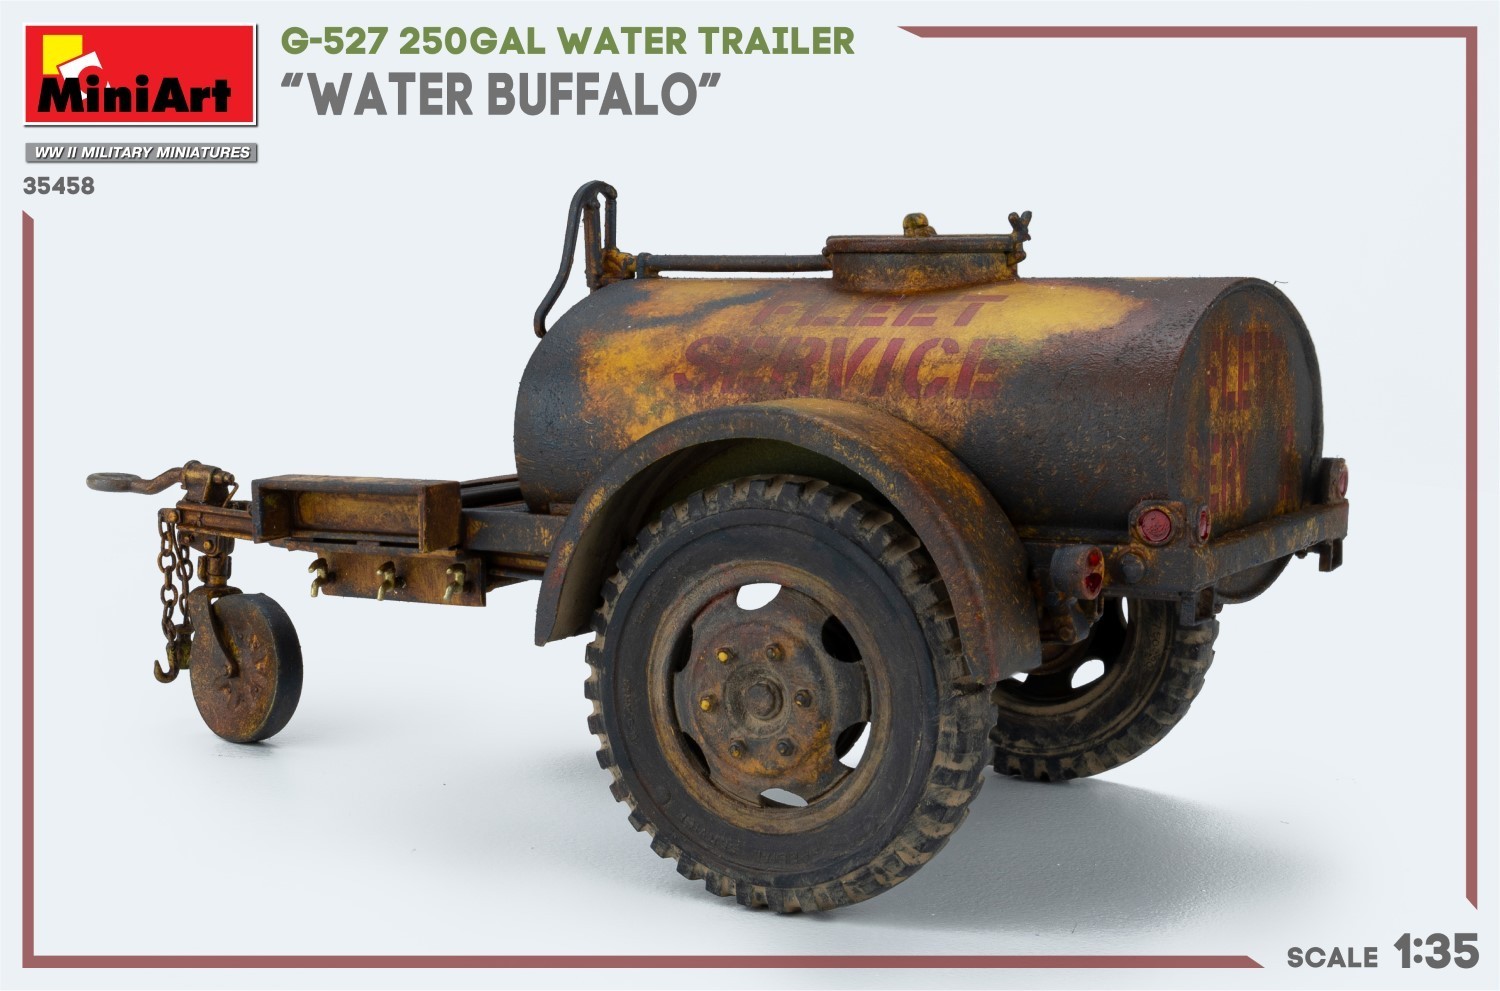 MiniArt G-527 250GAL Water Trailer “Water Buffalo” Rust Paint-4